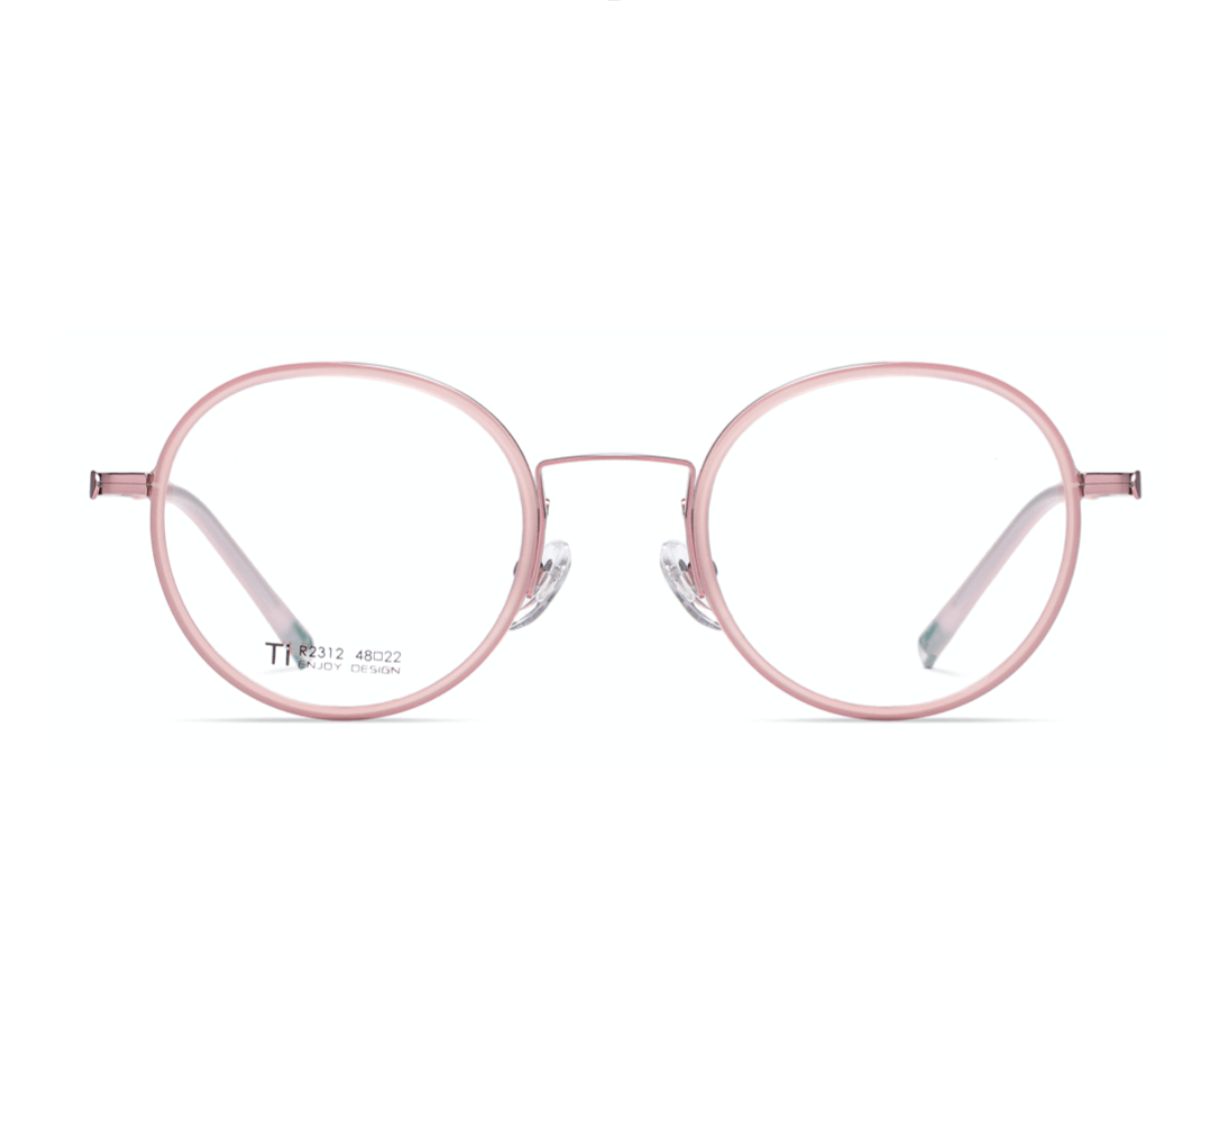 Titanium glasses frame, eyewear frame manufacturers, optical glasses manufacturer